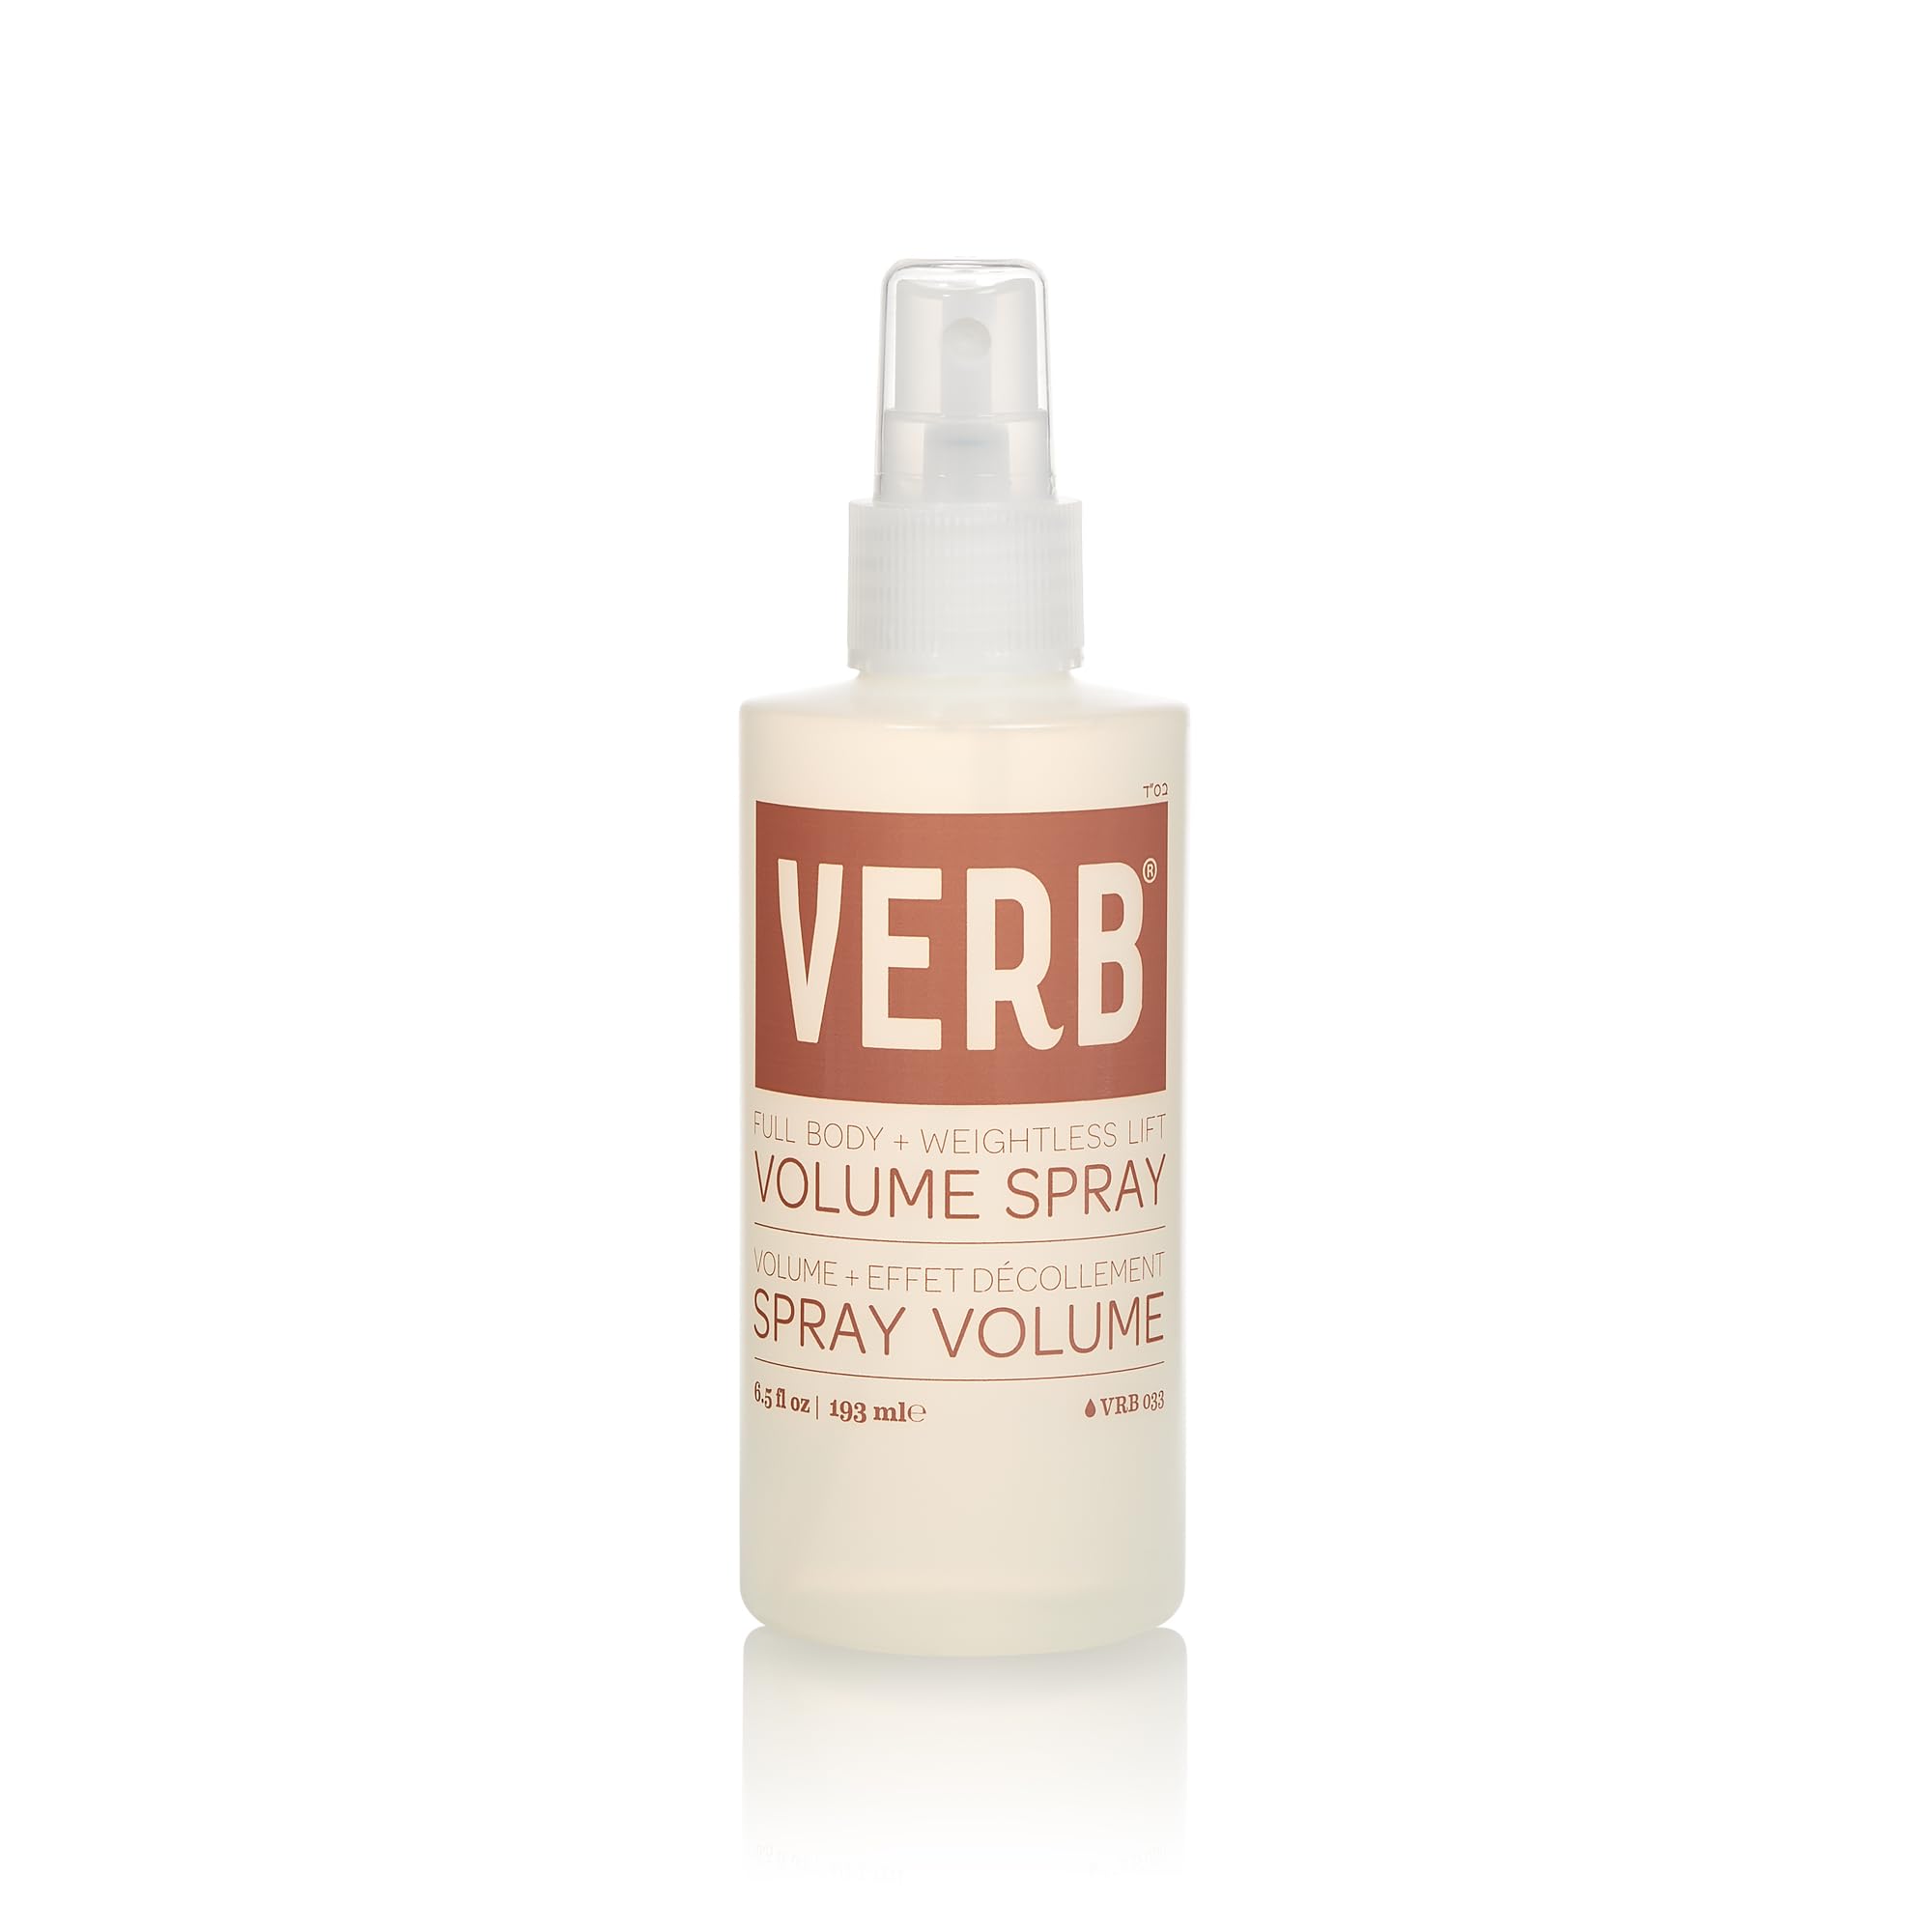 VERB Volume Spray, 6.5 fl oz